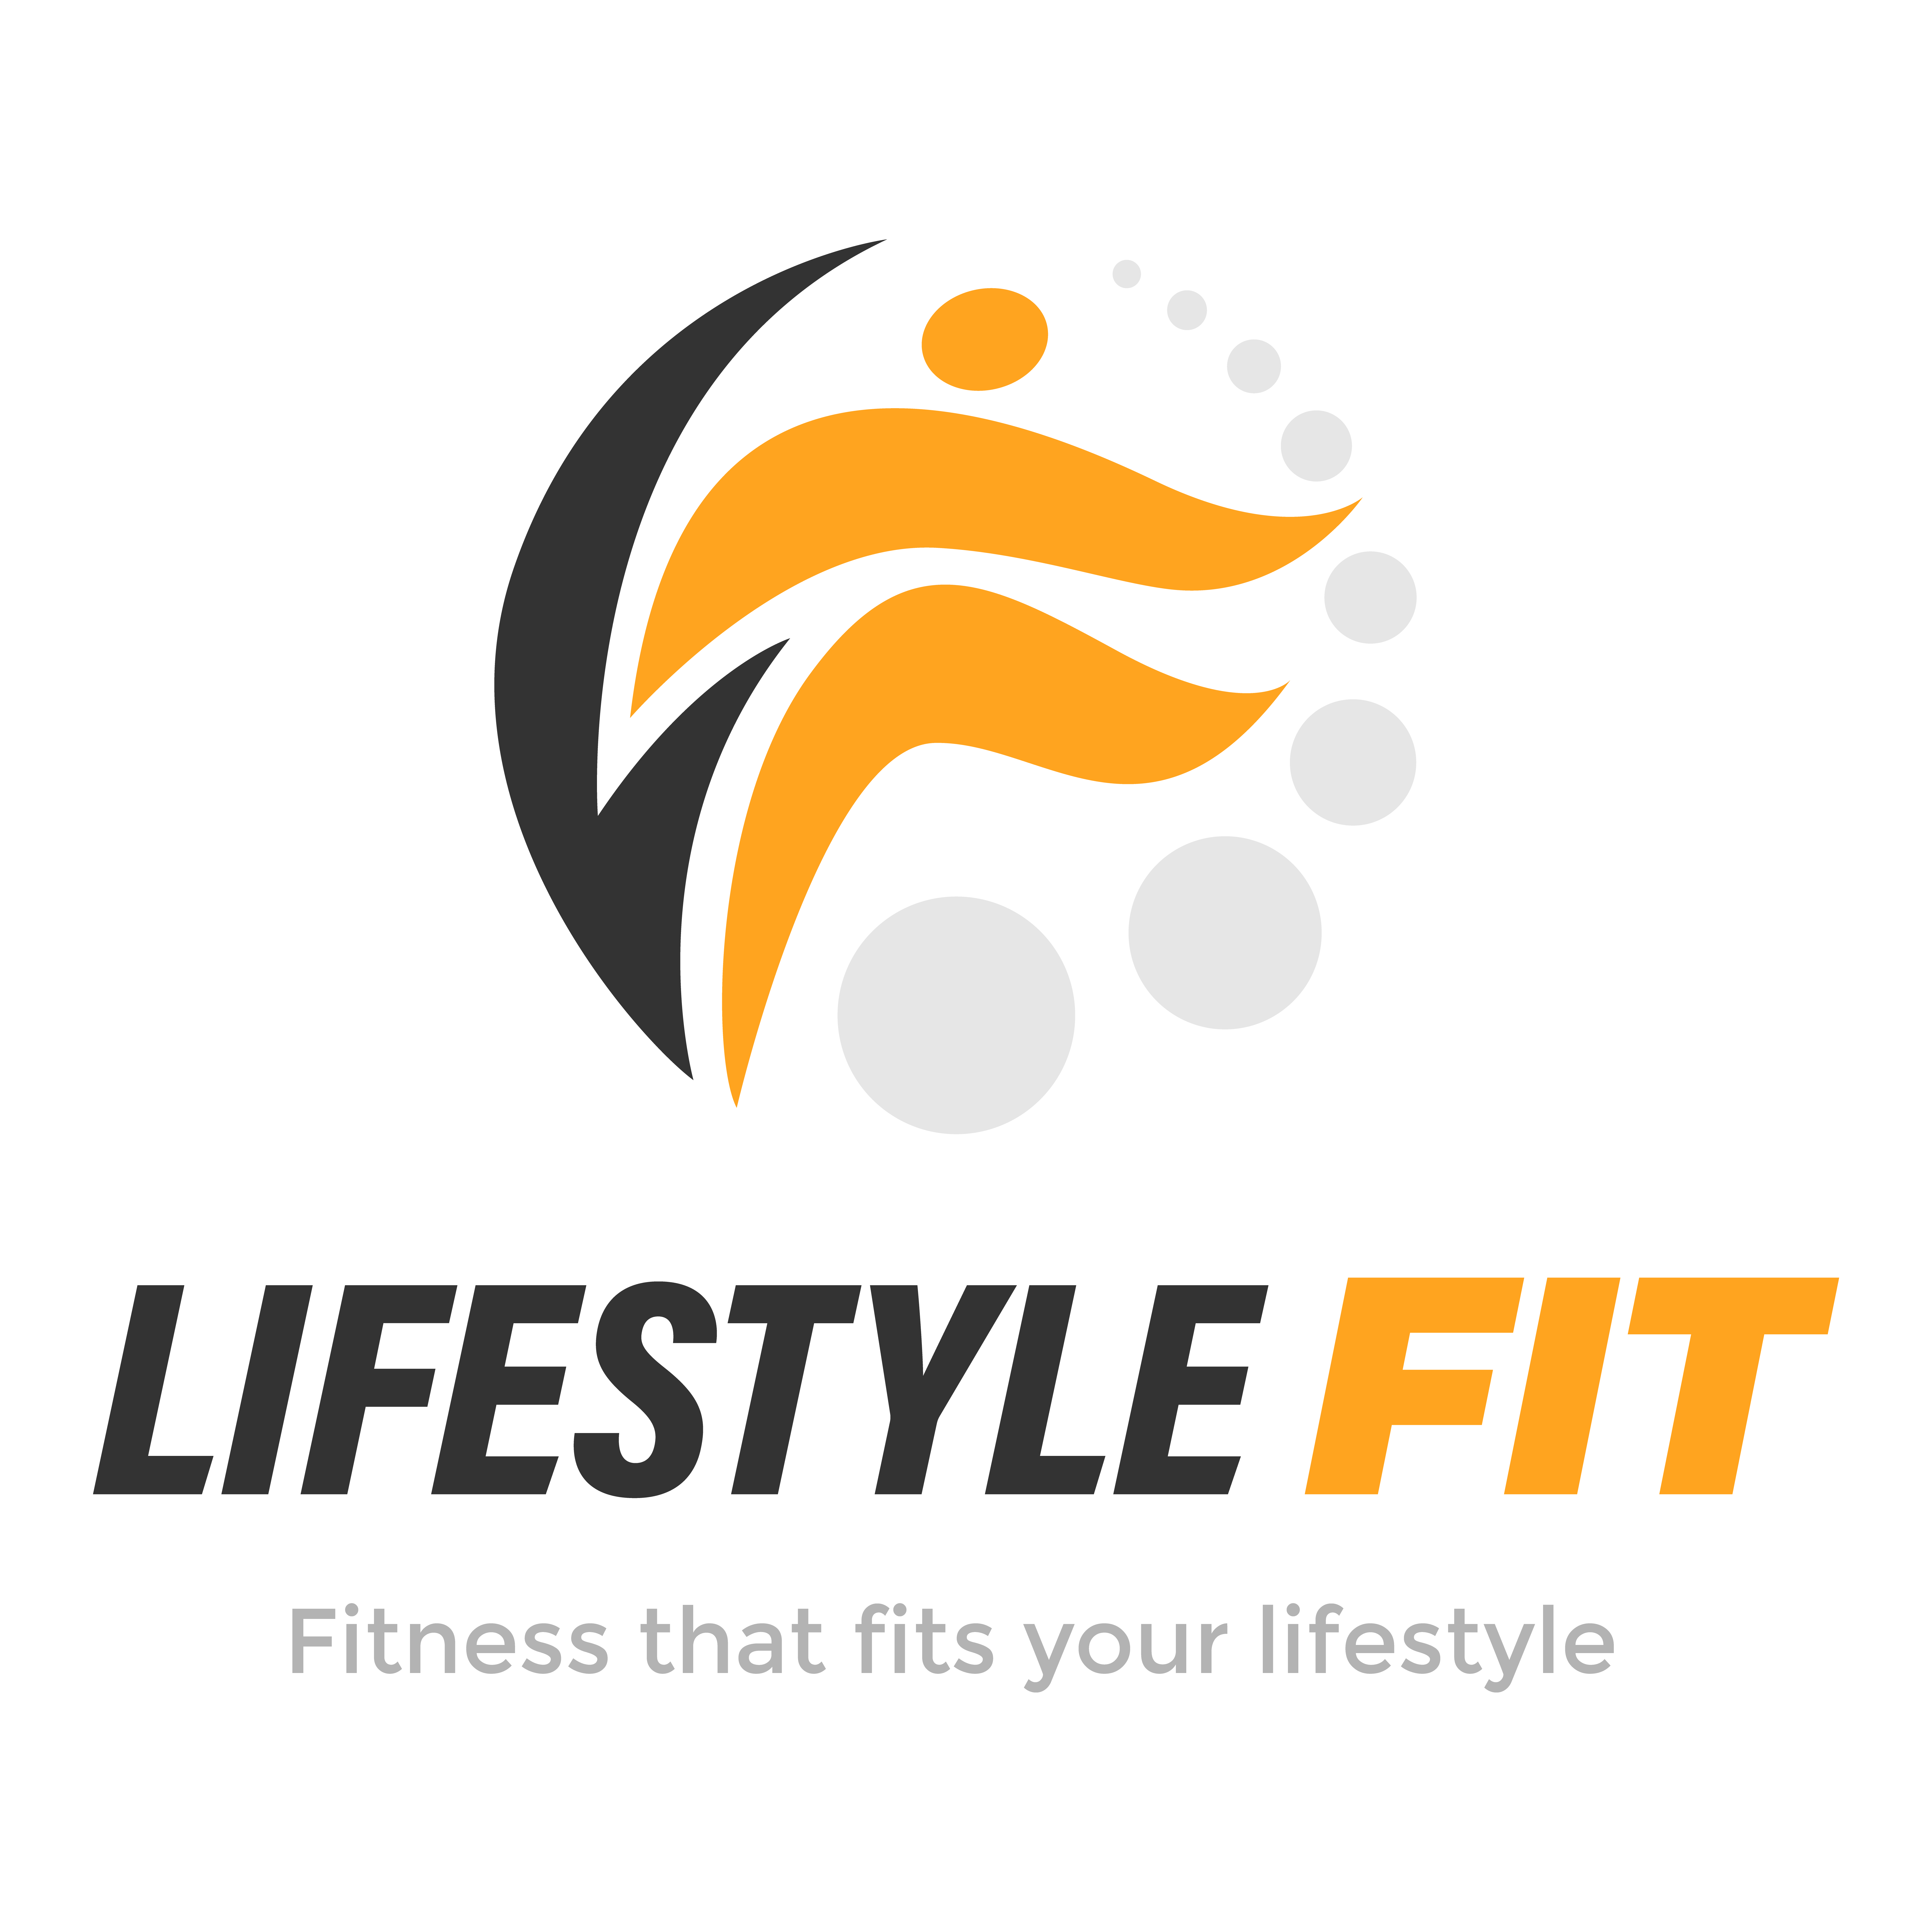 LifeStyle Fit, LLC